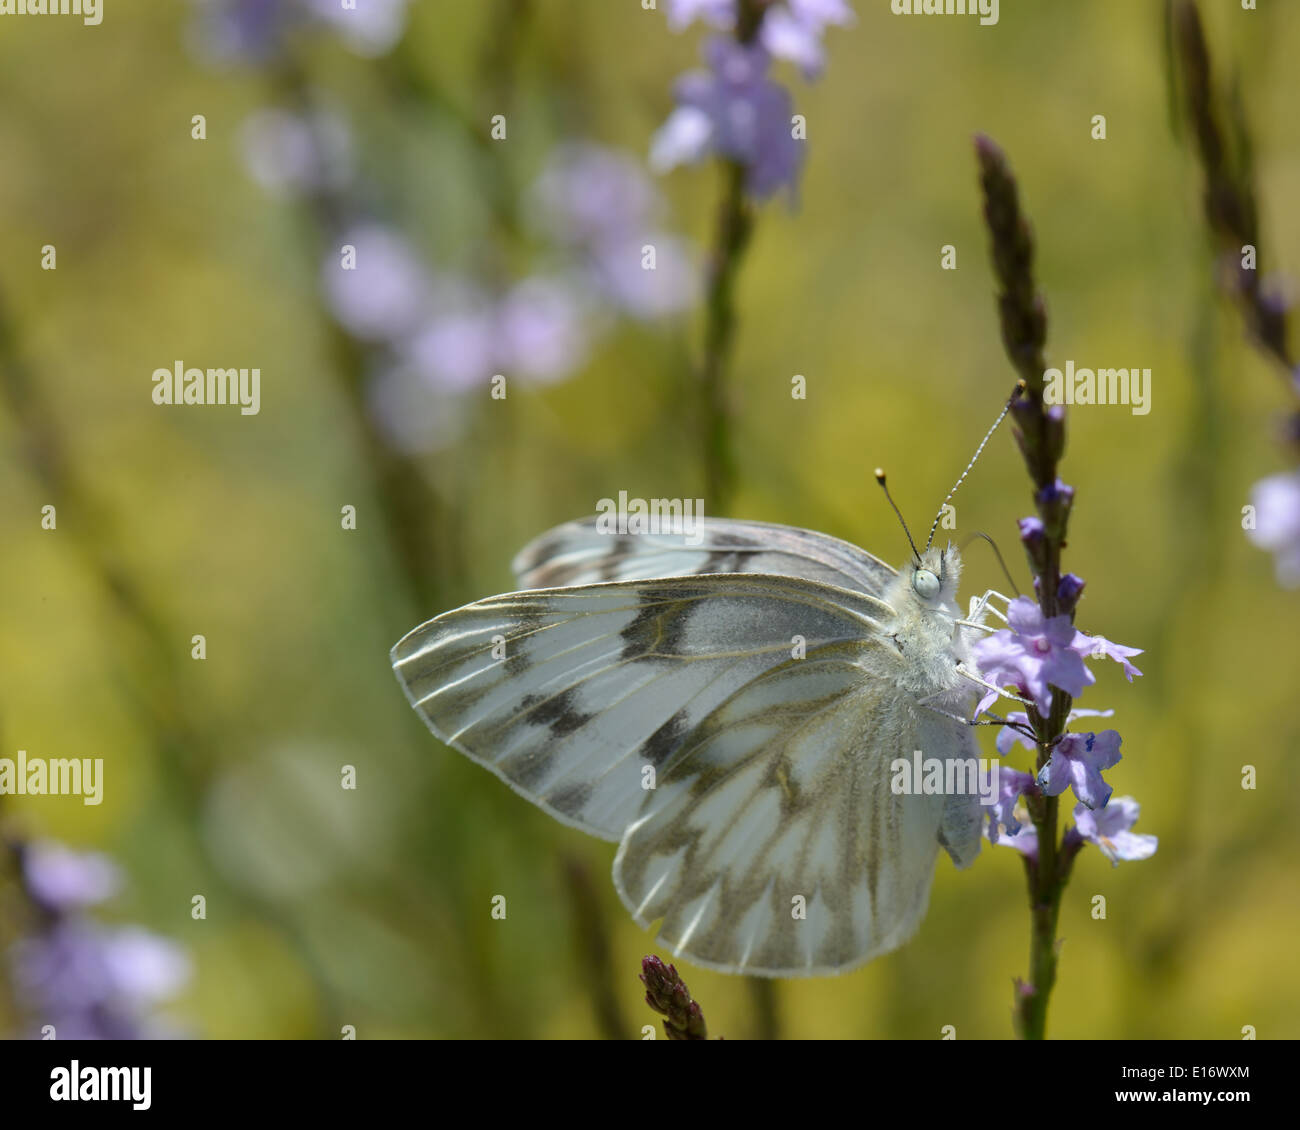 White Butterfly accidentada Foto de stock